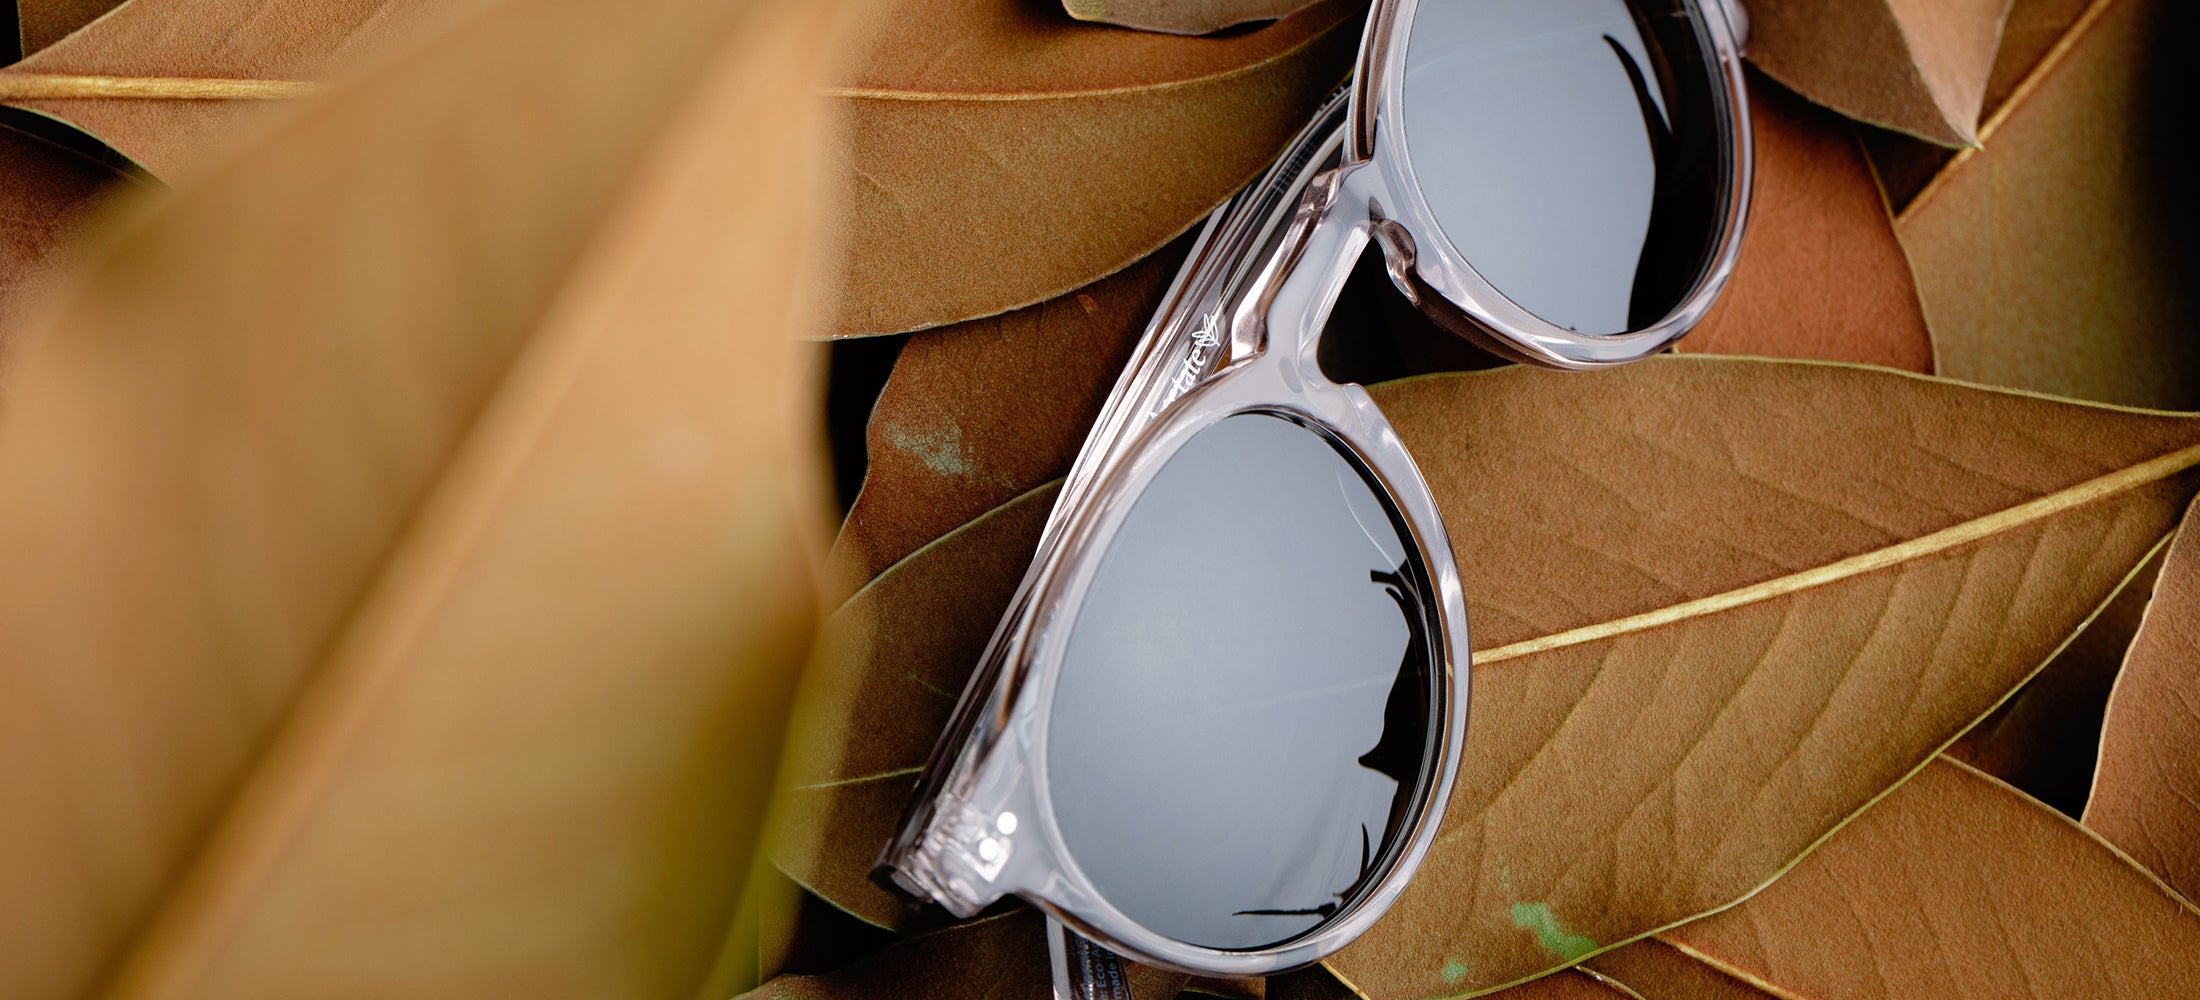 Polarized Sunglasses - All You Need To Know - Mr. Woodini Eyewear